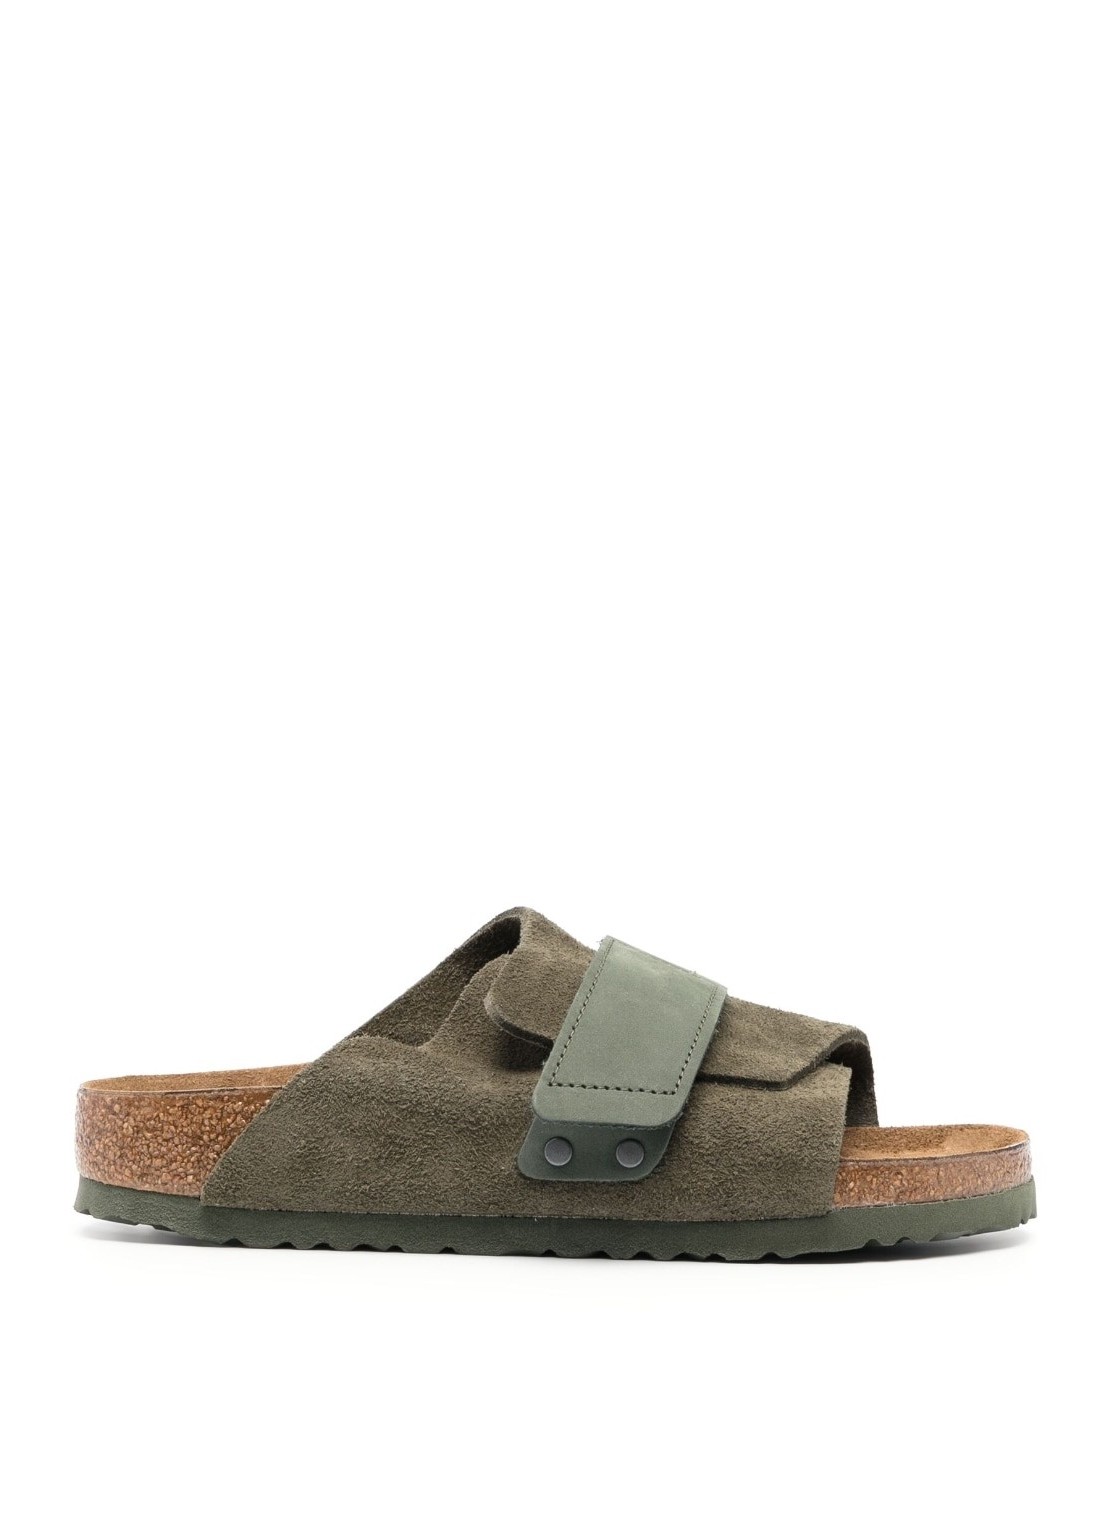 Sandalia birkenstock sandal man kyoto vl nu 1023830 thyme talla verde
 